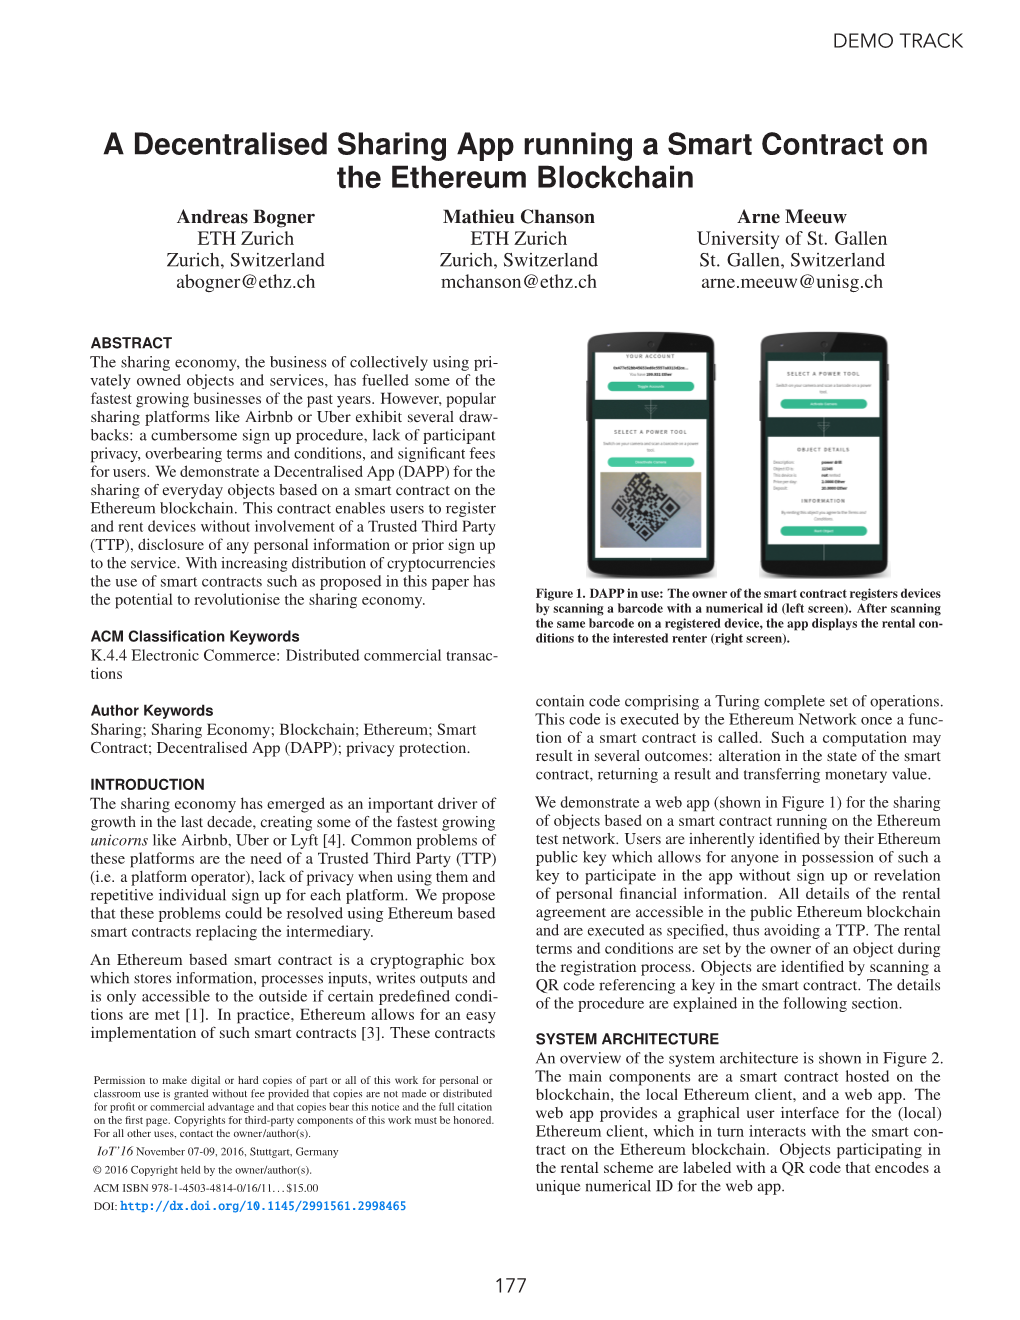 A Decentralised Sharing App Running a Smart Contract on the Ethereum Blockchain Andreas Bogner Mathieu Chanson Arne Meeuw ETH Zurich ETH Zurich University of St